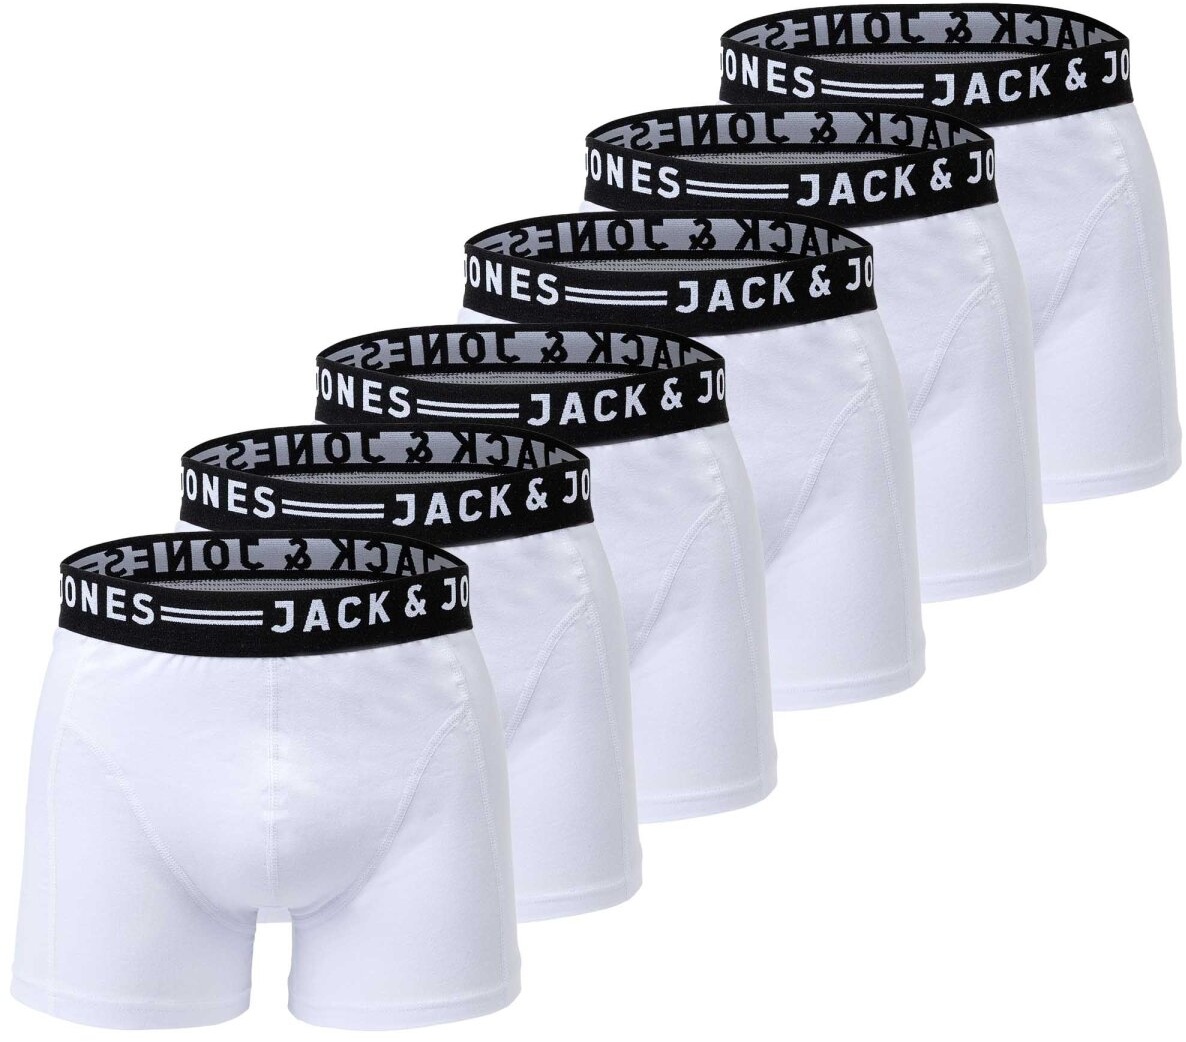 JACK&JONES Herren Boxer Shorts, 6er Pack - SENSE TRUNKS, Baumwoll-Stretch Weiß 2XL